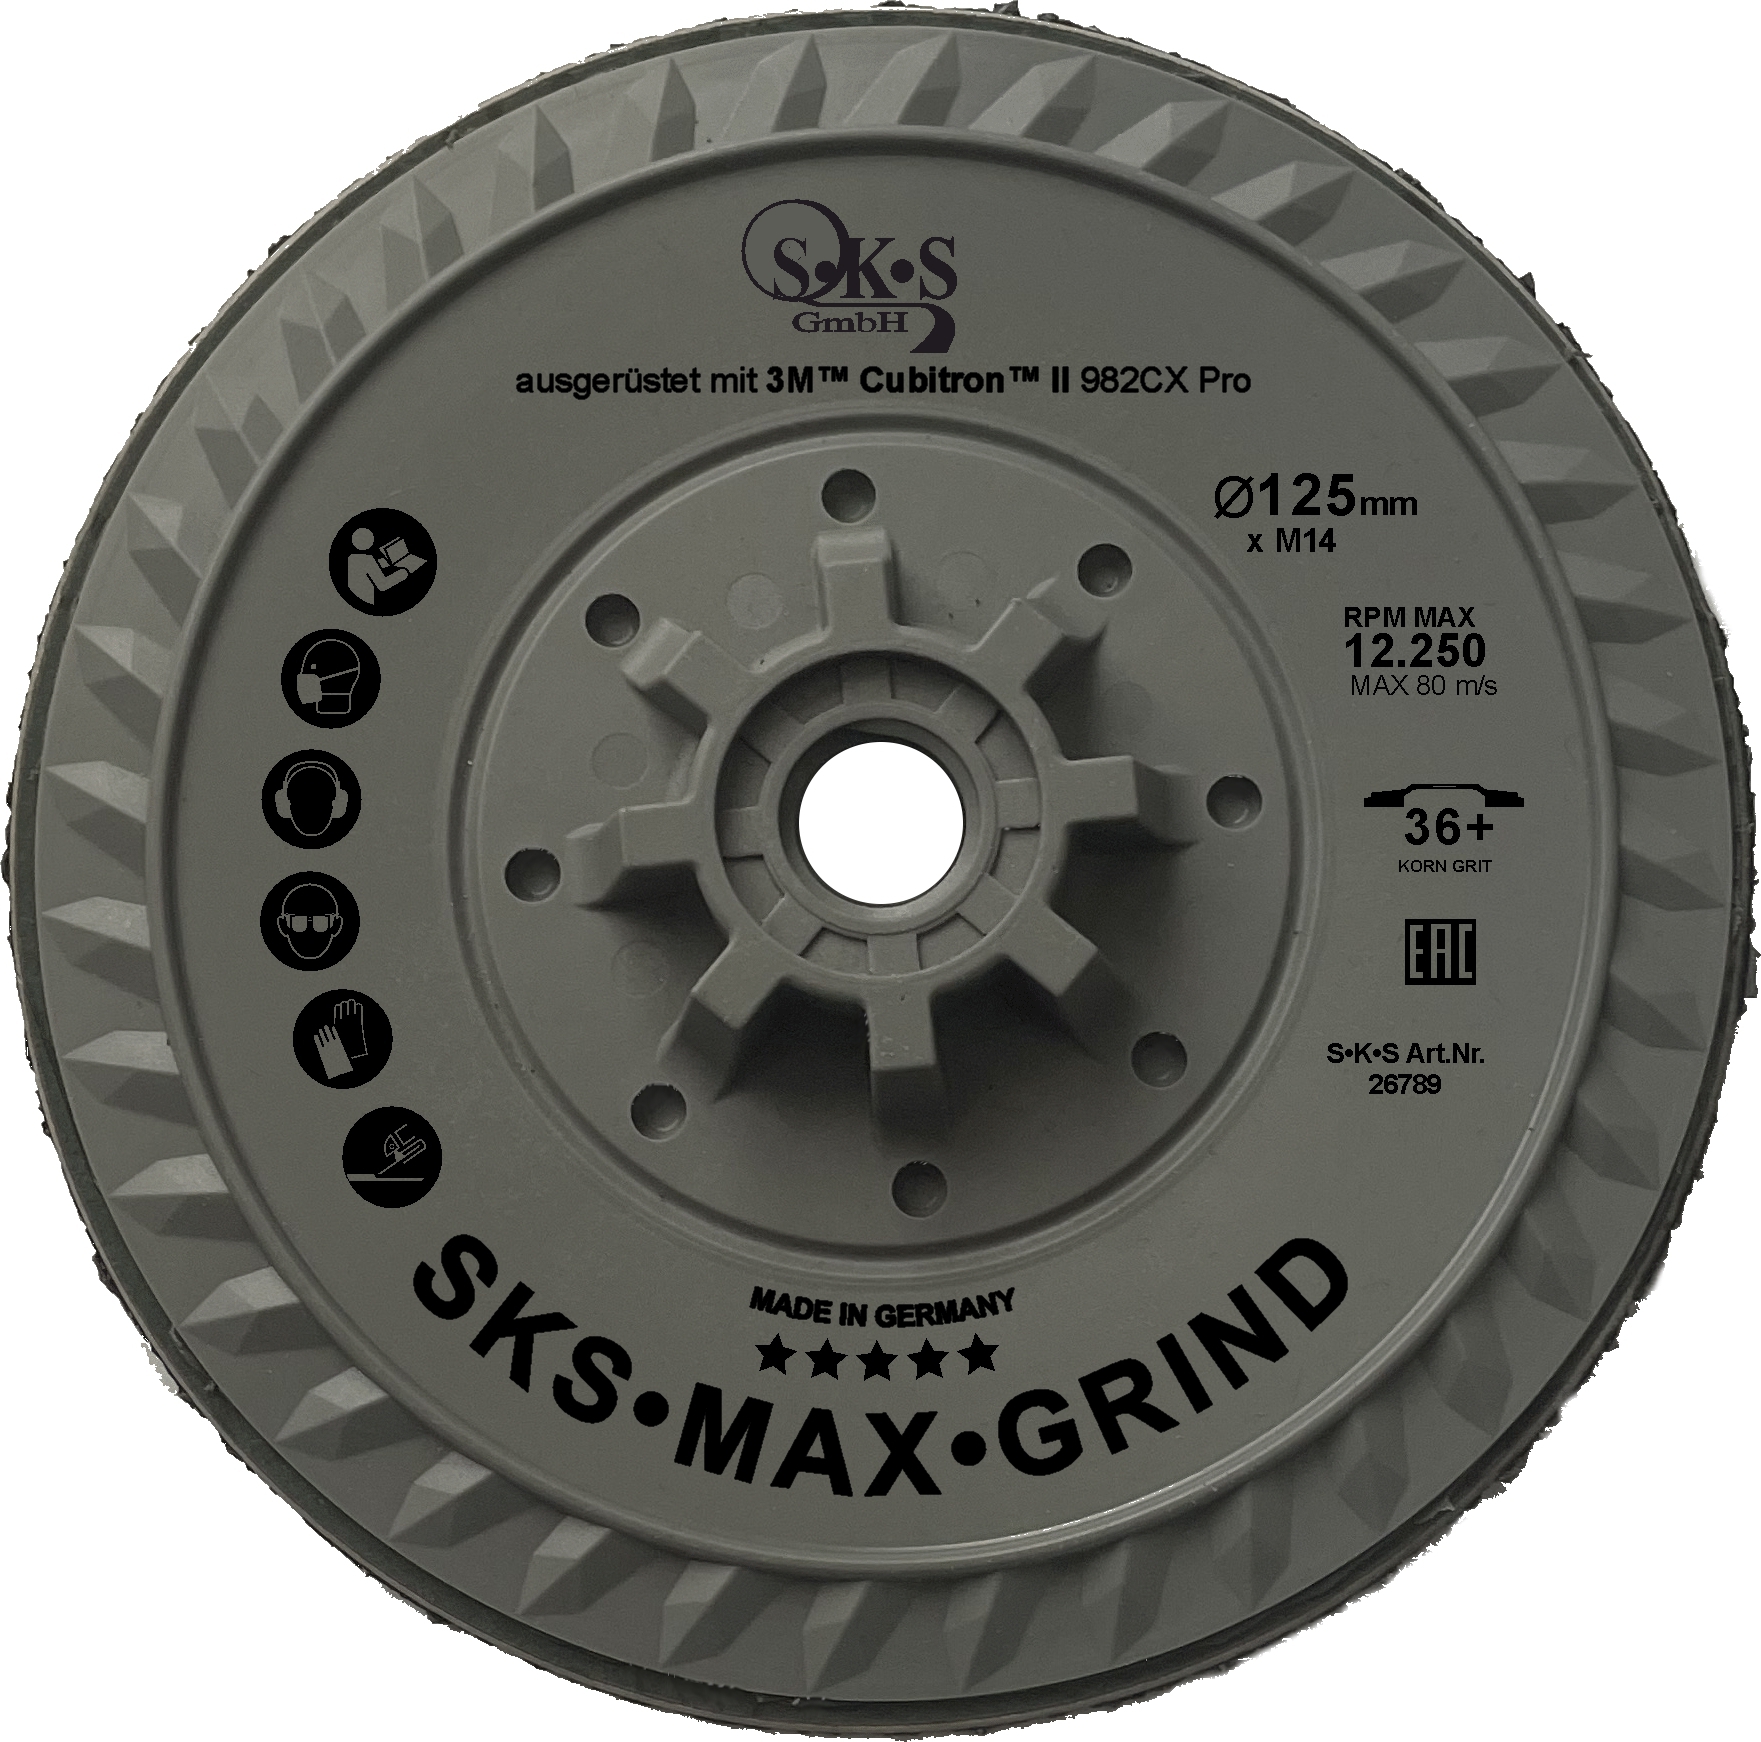 S-K-S Max Grind, 3M Cubitron II Disco de fibra 982CX Pro, 125 mm, tamaño de grano 36+, con fijaciones roscadas M14